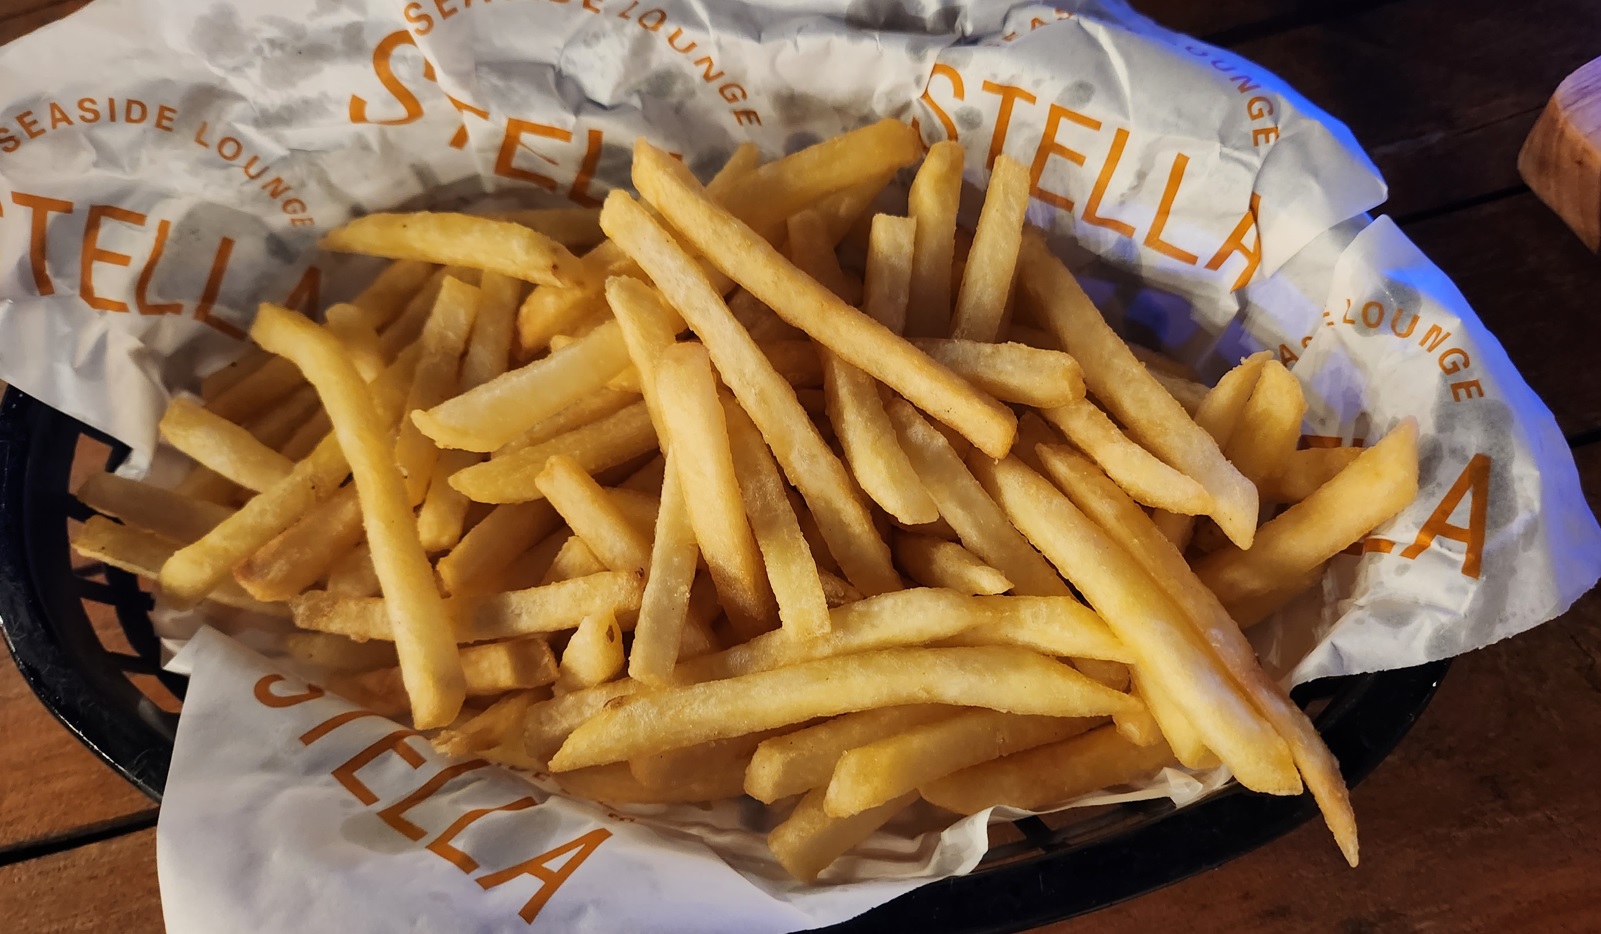 stella seaside lounge fries